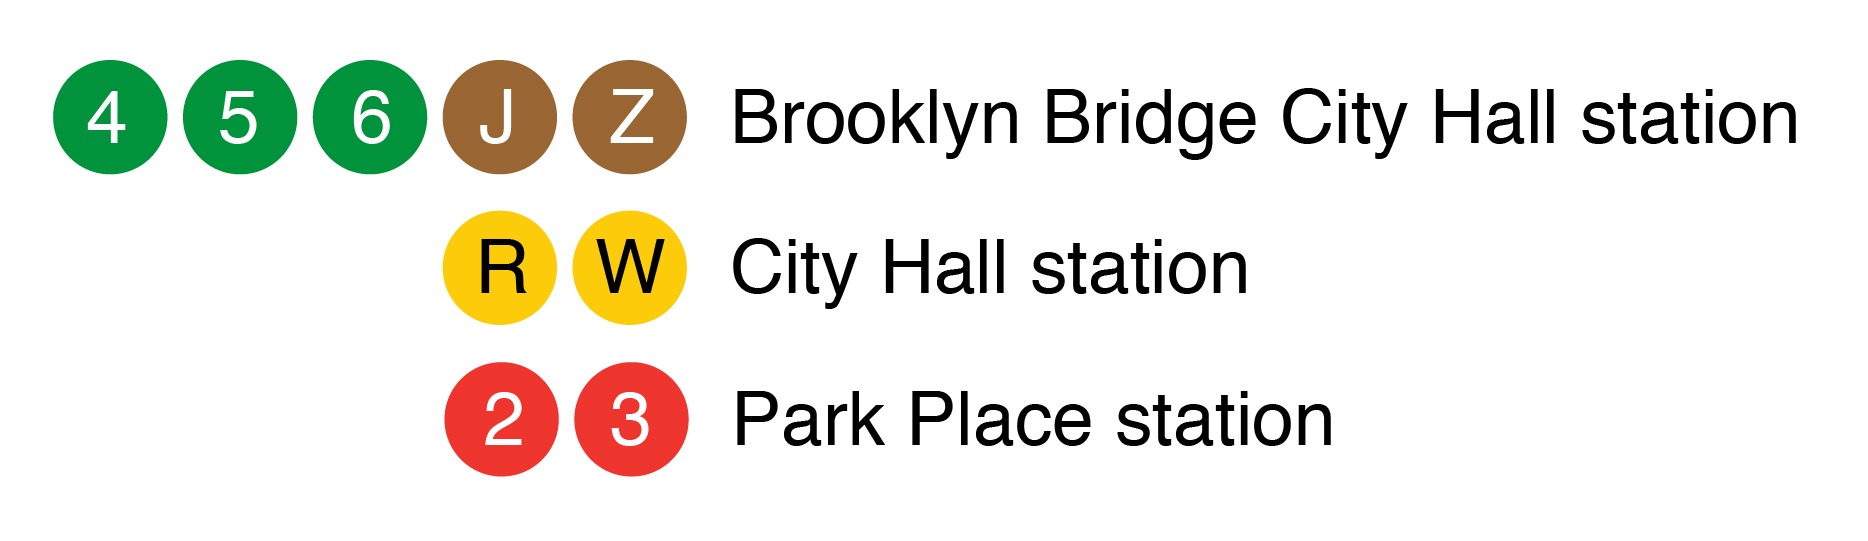 4/5/6/J/Z Brooklyn Bridge City Hall station, R/W City Hall station, 2/3 Park Place station